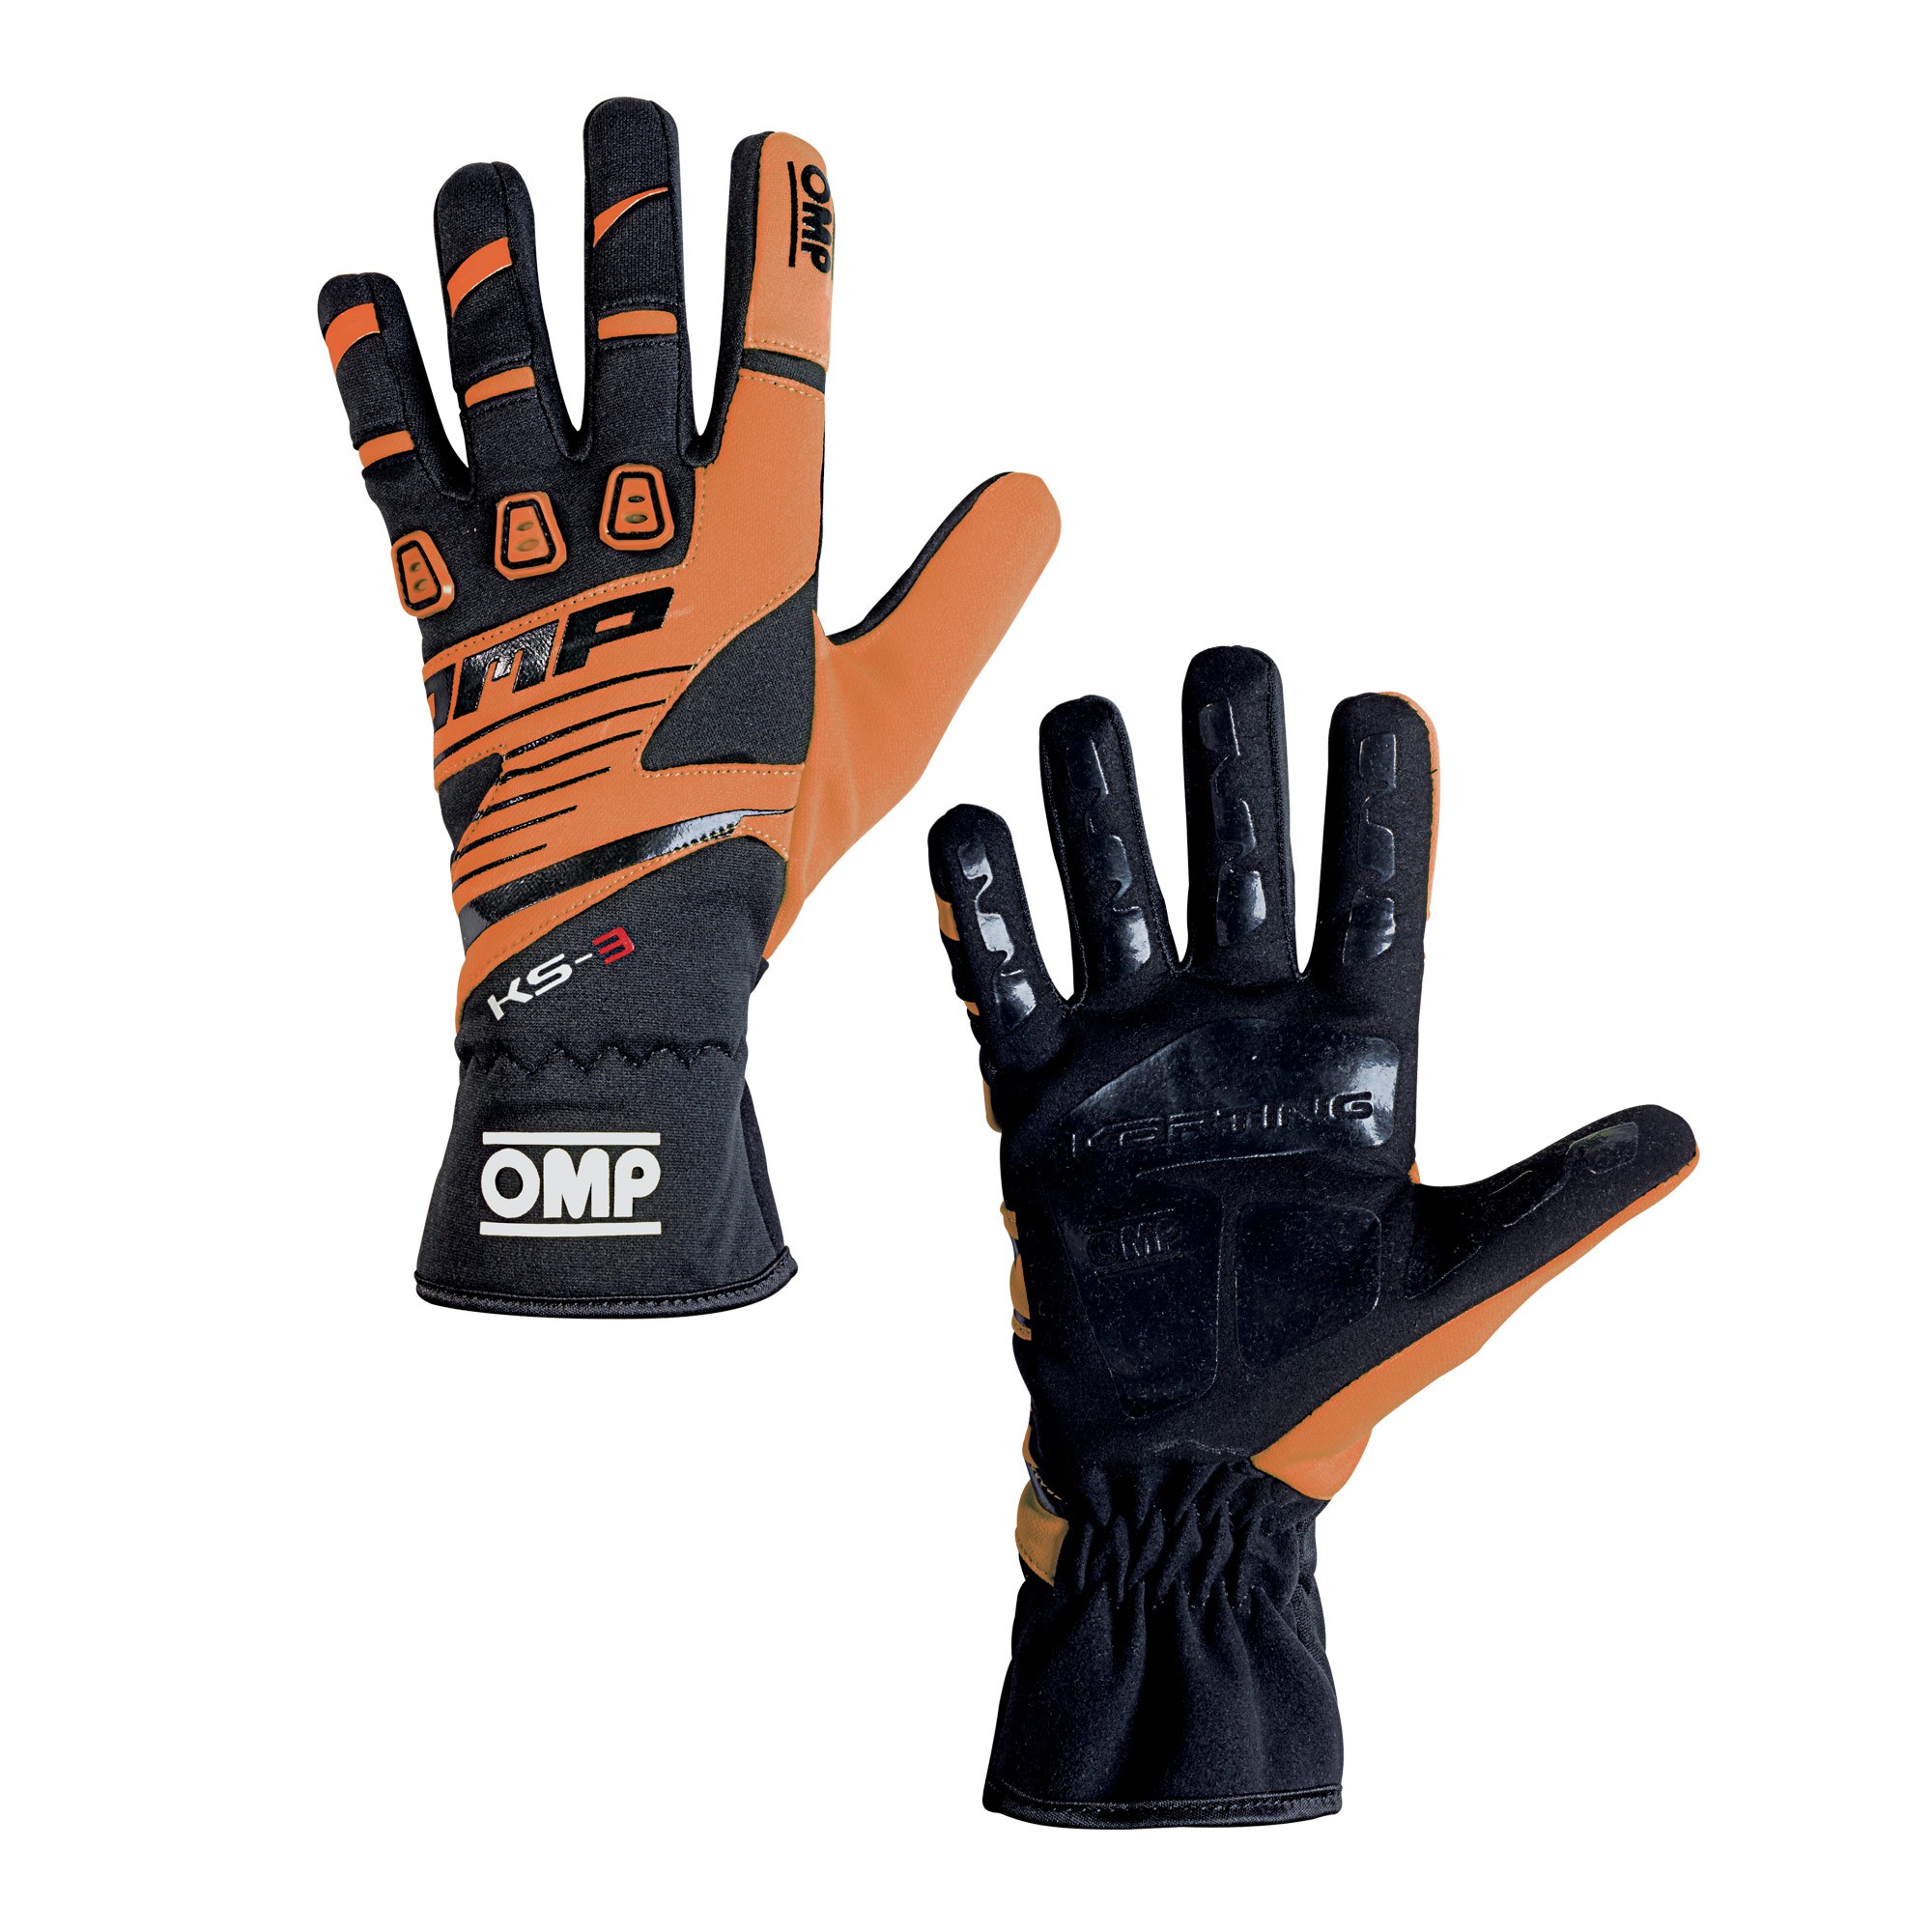 KS-3 Gloves my2018